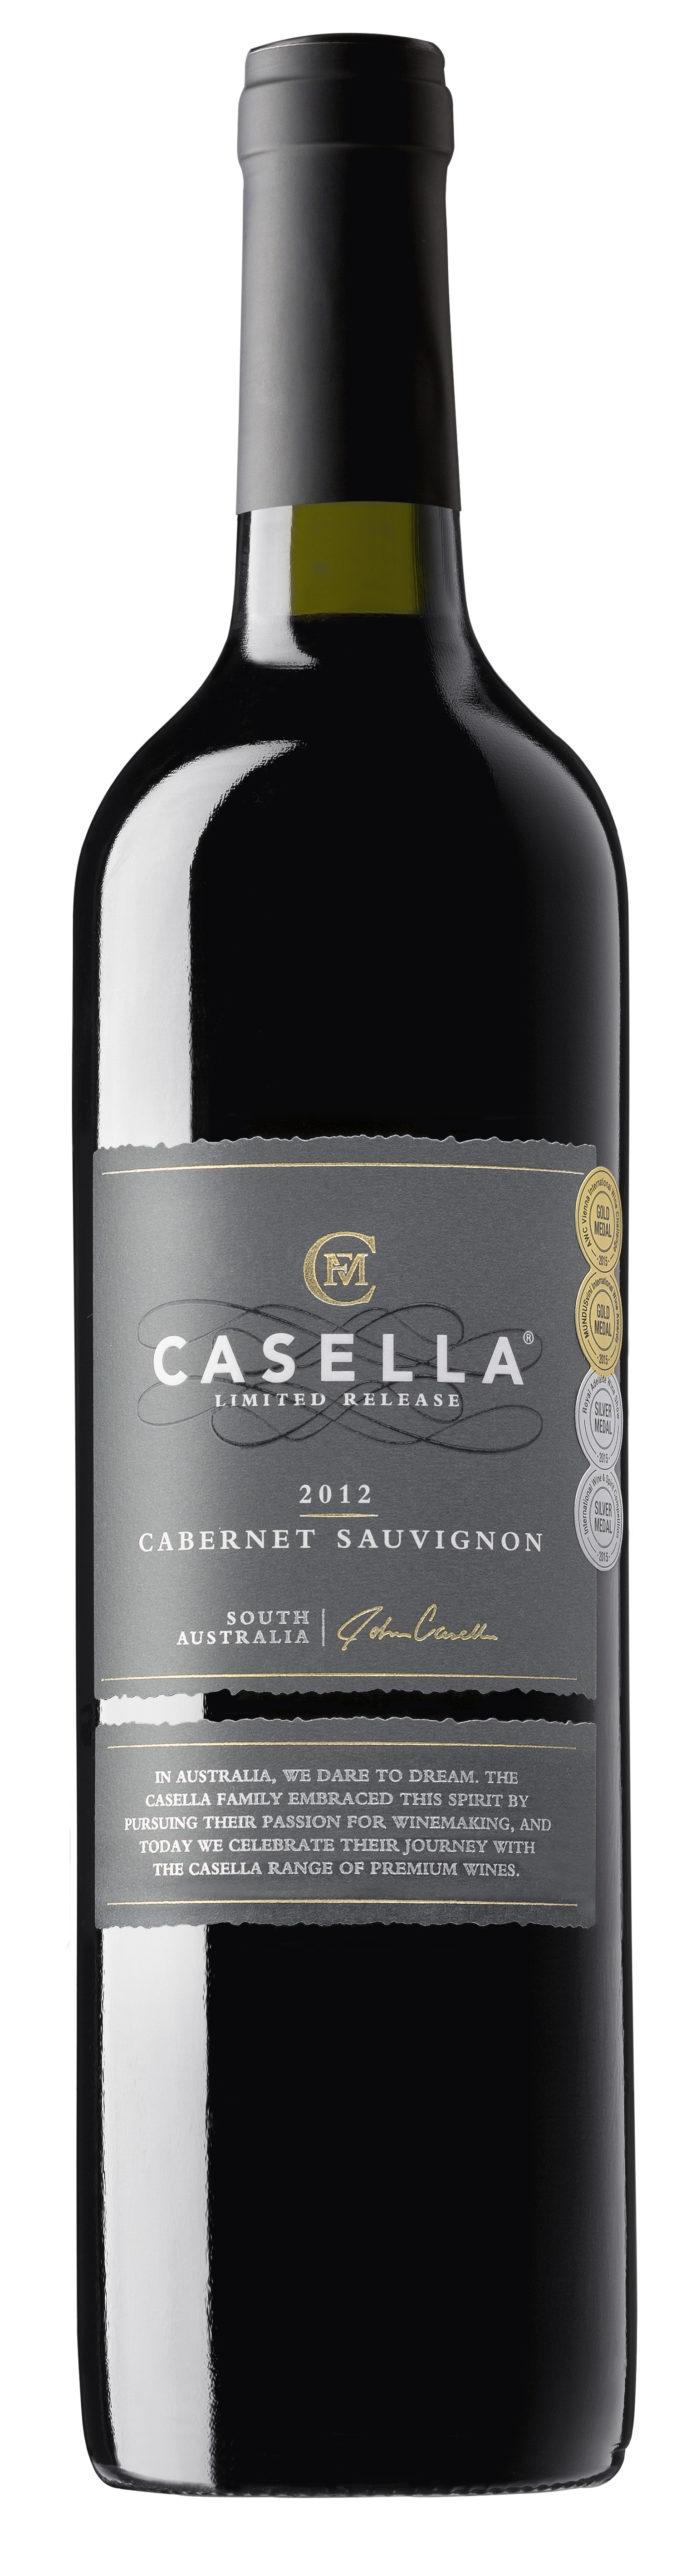 2012 Limited Release Cabernet Sauvignon